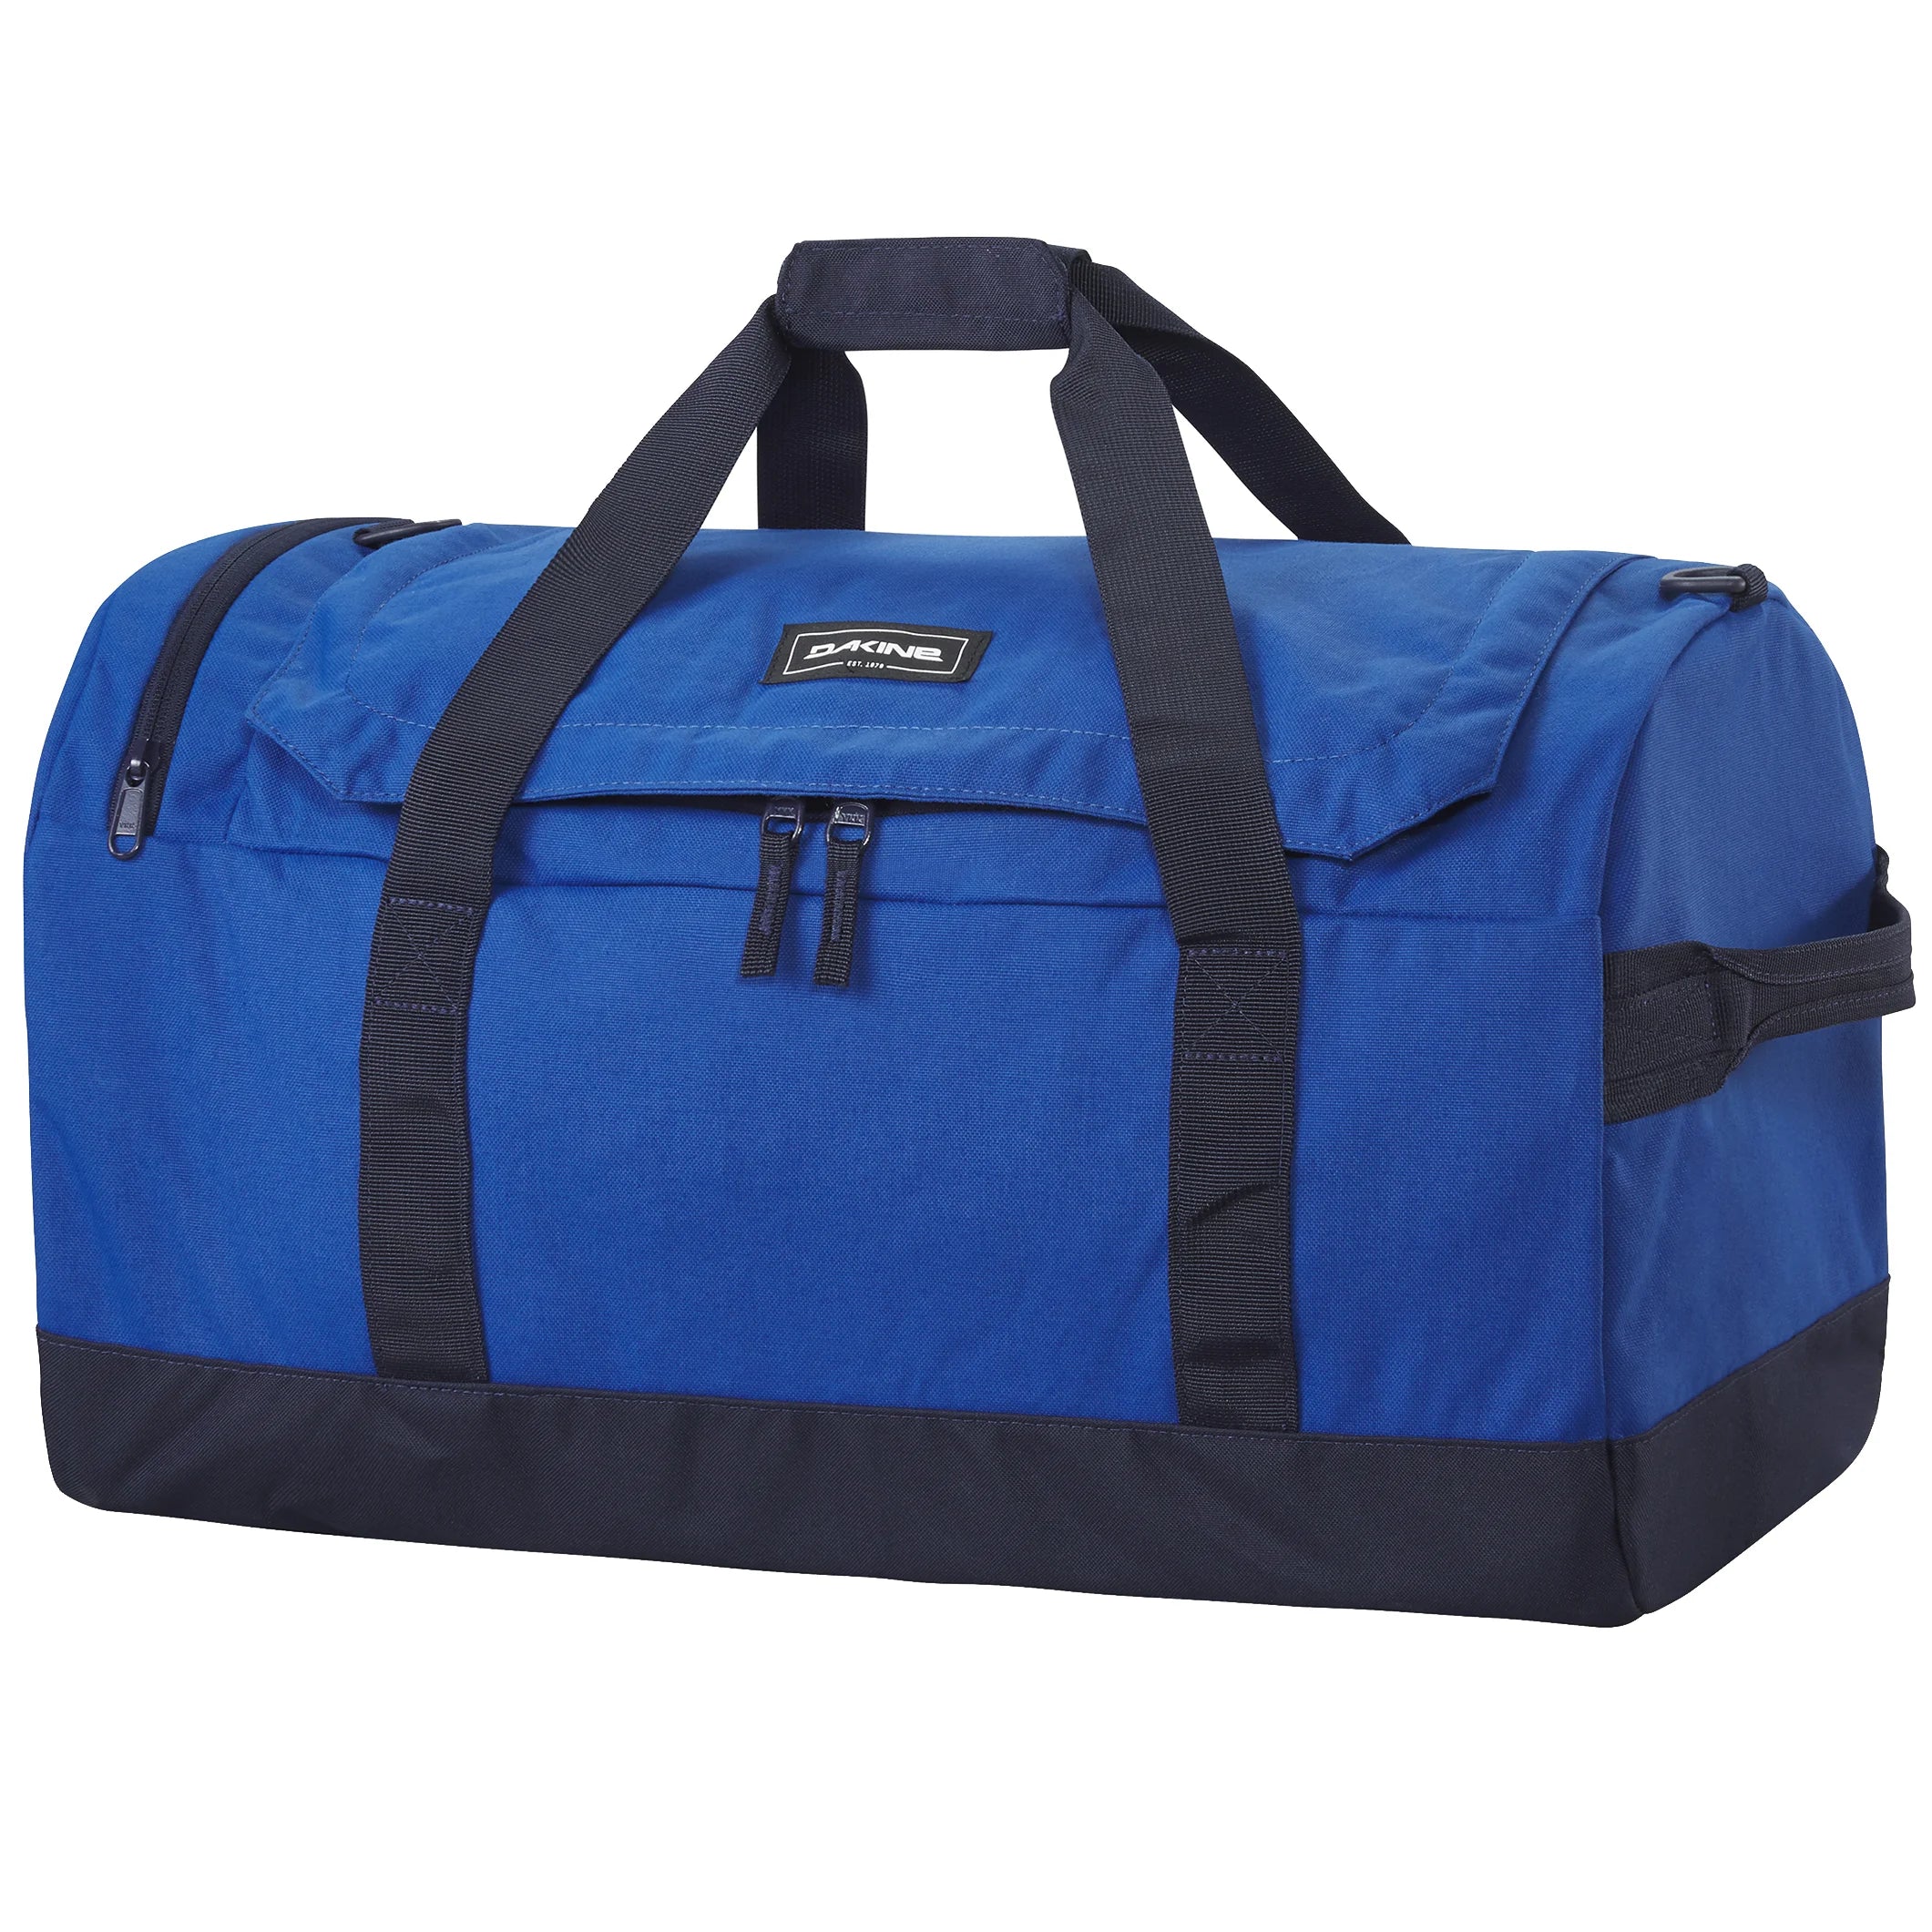 Dakine Packs & Bags EQ Duffle 50L Sporttasche 56 cm - Deep Blue